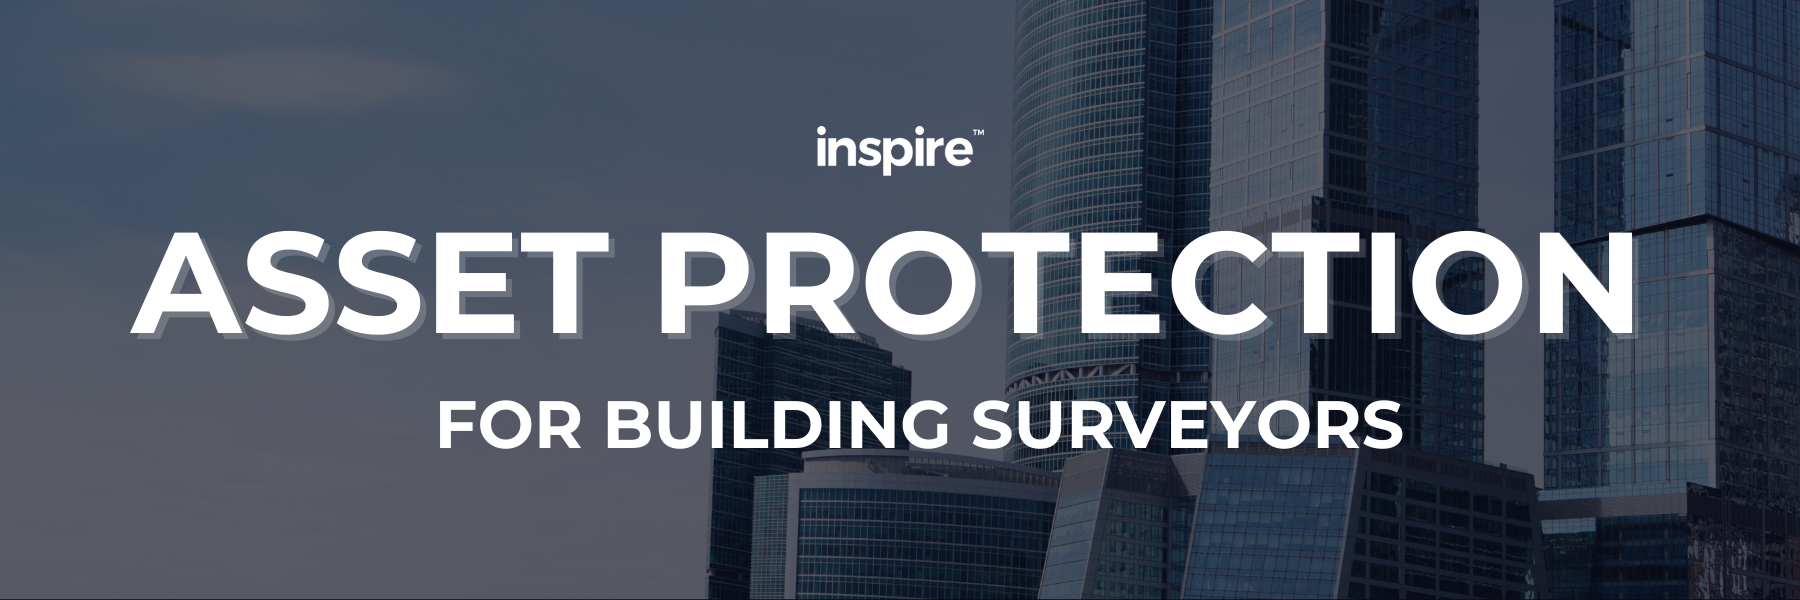 Asset Protection For Building Surveyors V2